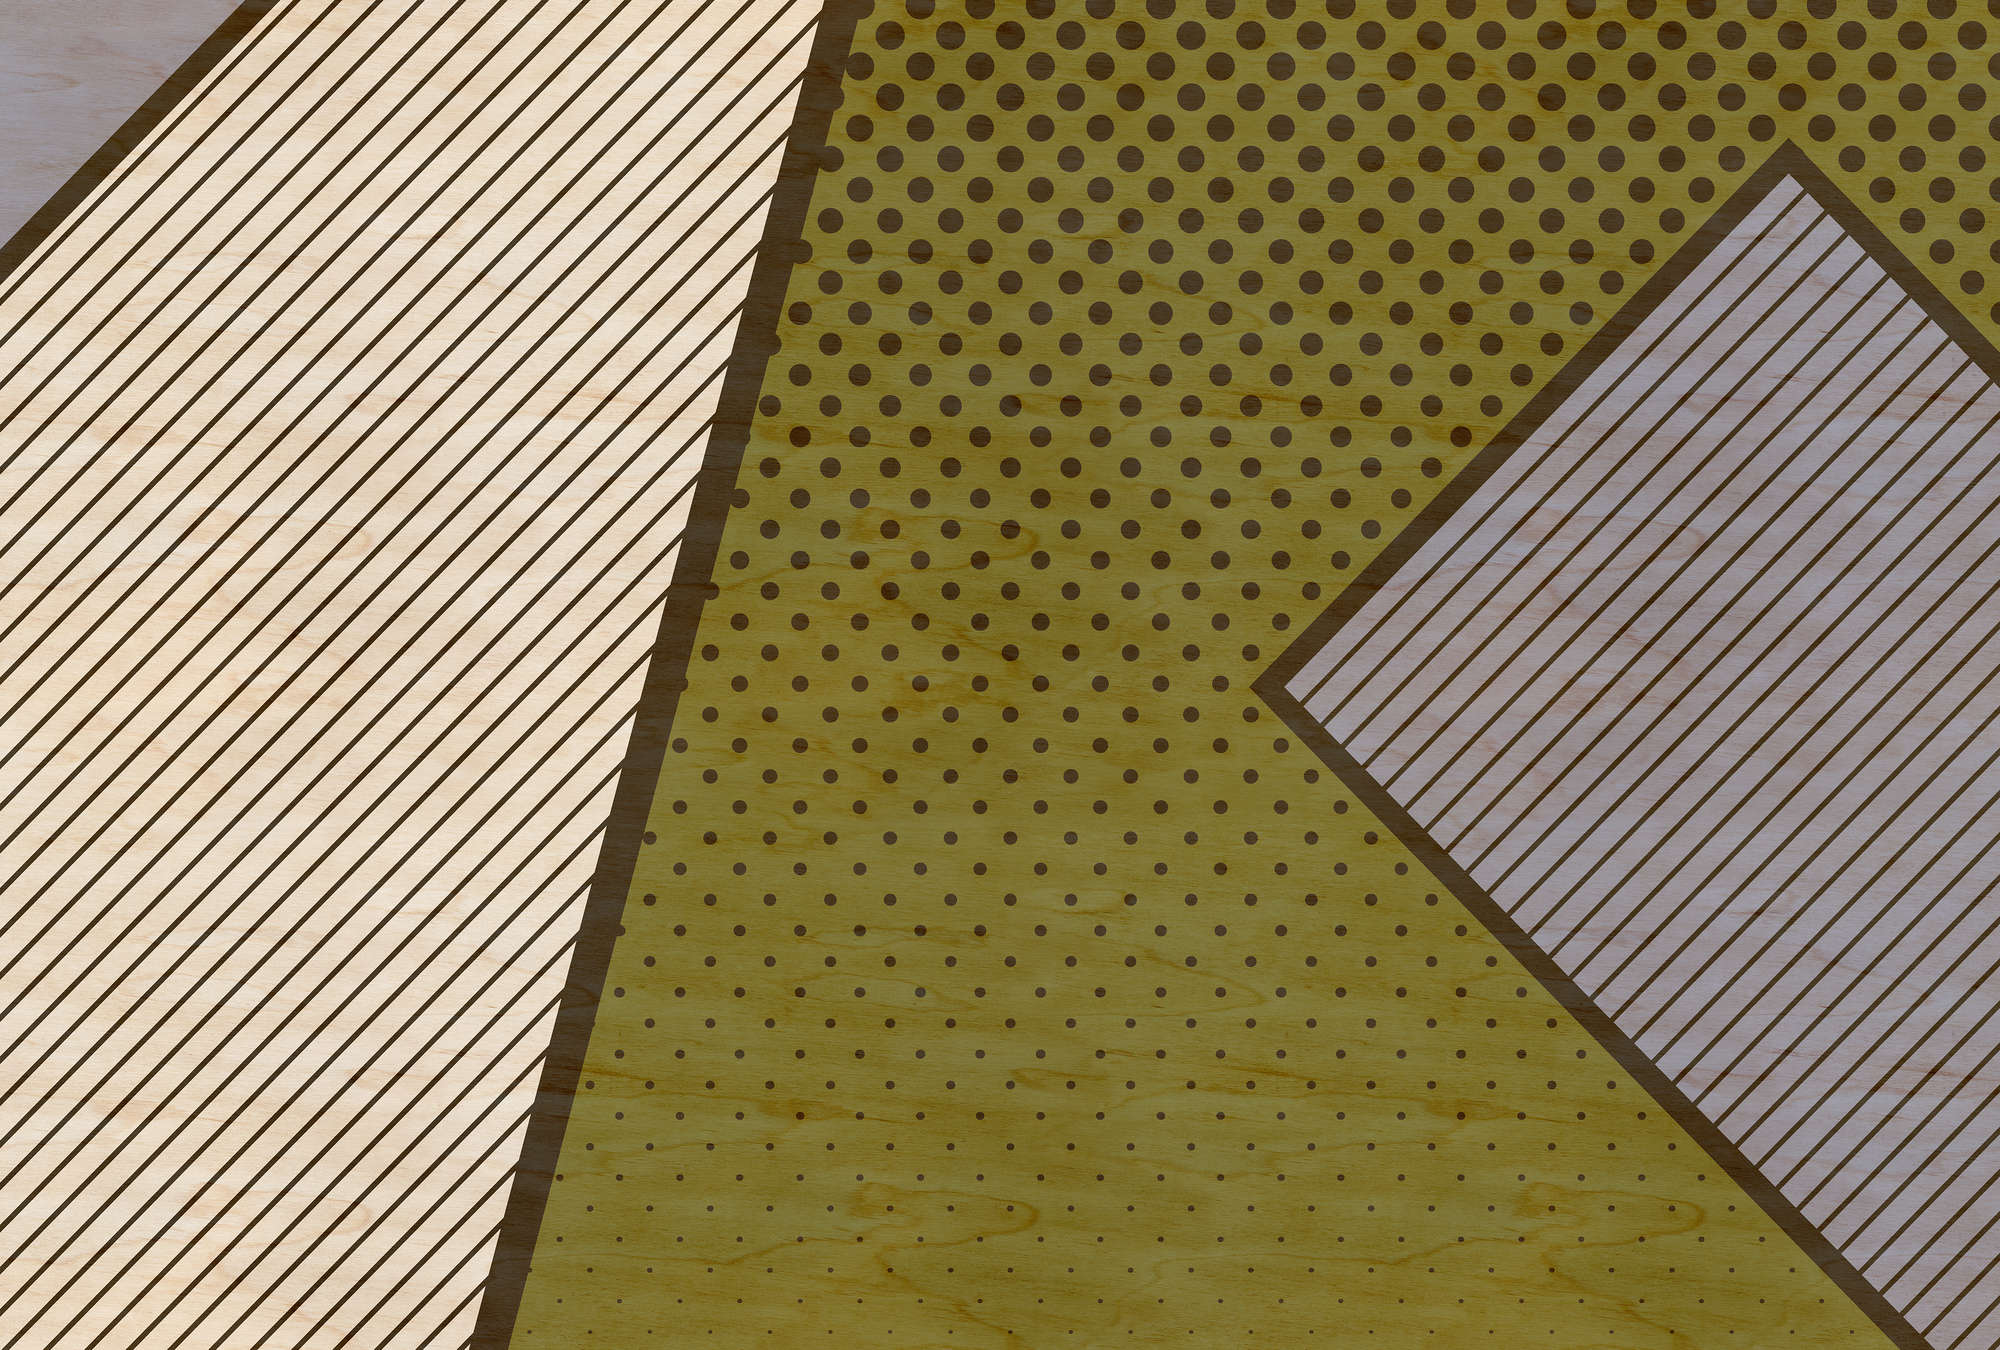             Bird gang 2 - Papier peint, motif moderne style pop art - structure contreplaquée - beige, jaune | Premium intissé lisse
        